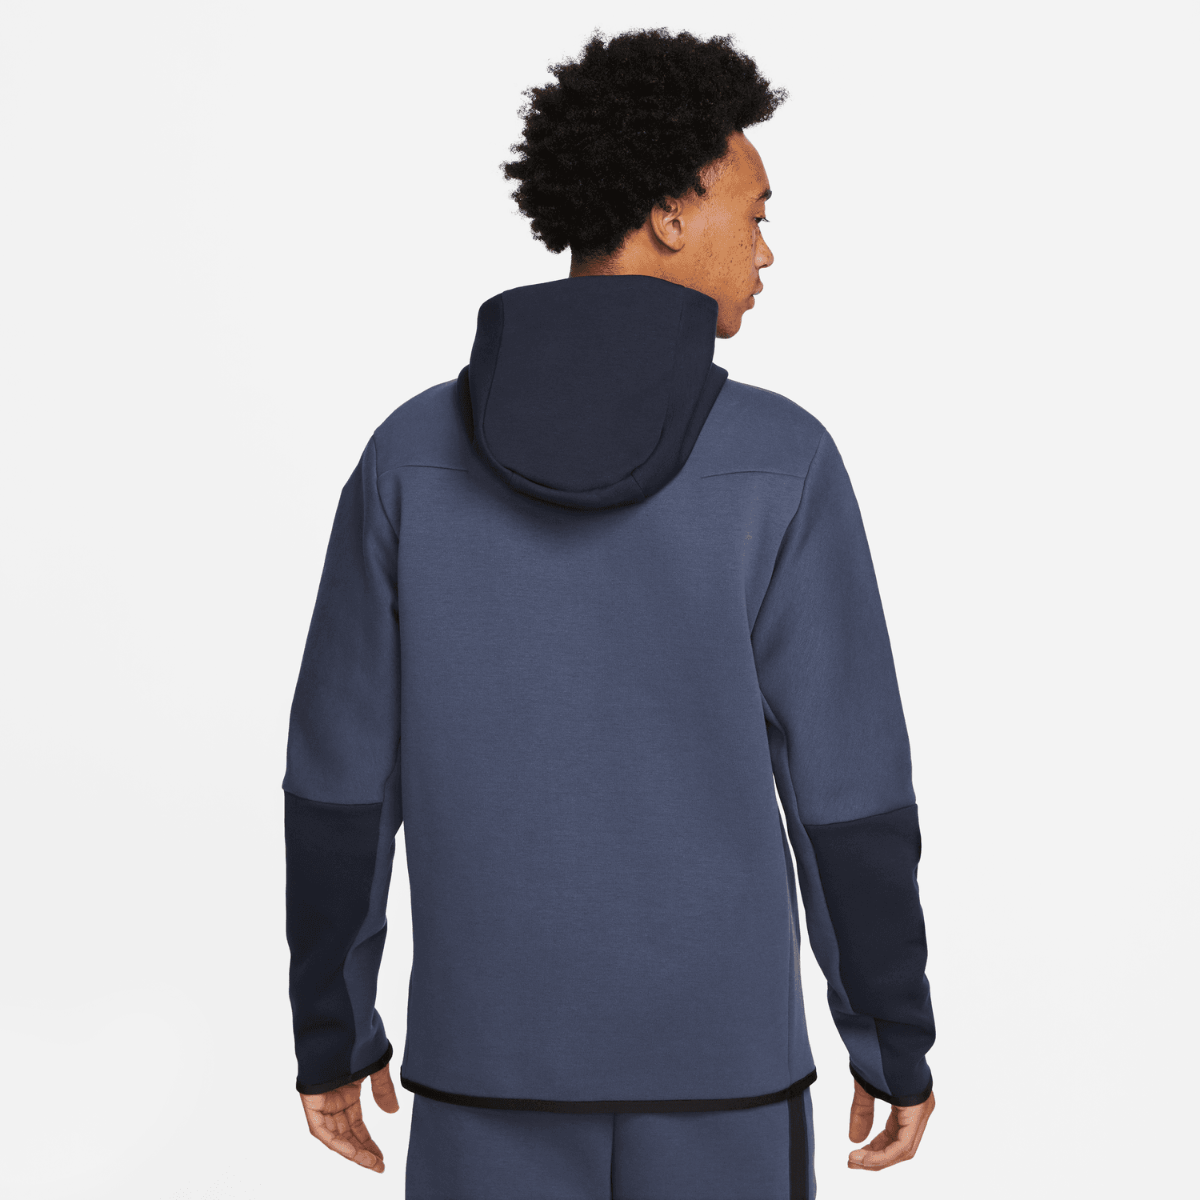 Nike Tech Fleece Kapuzenjacke – Blau/Schwarz